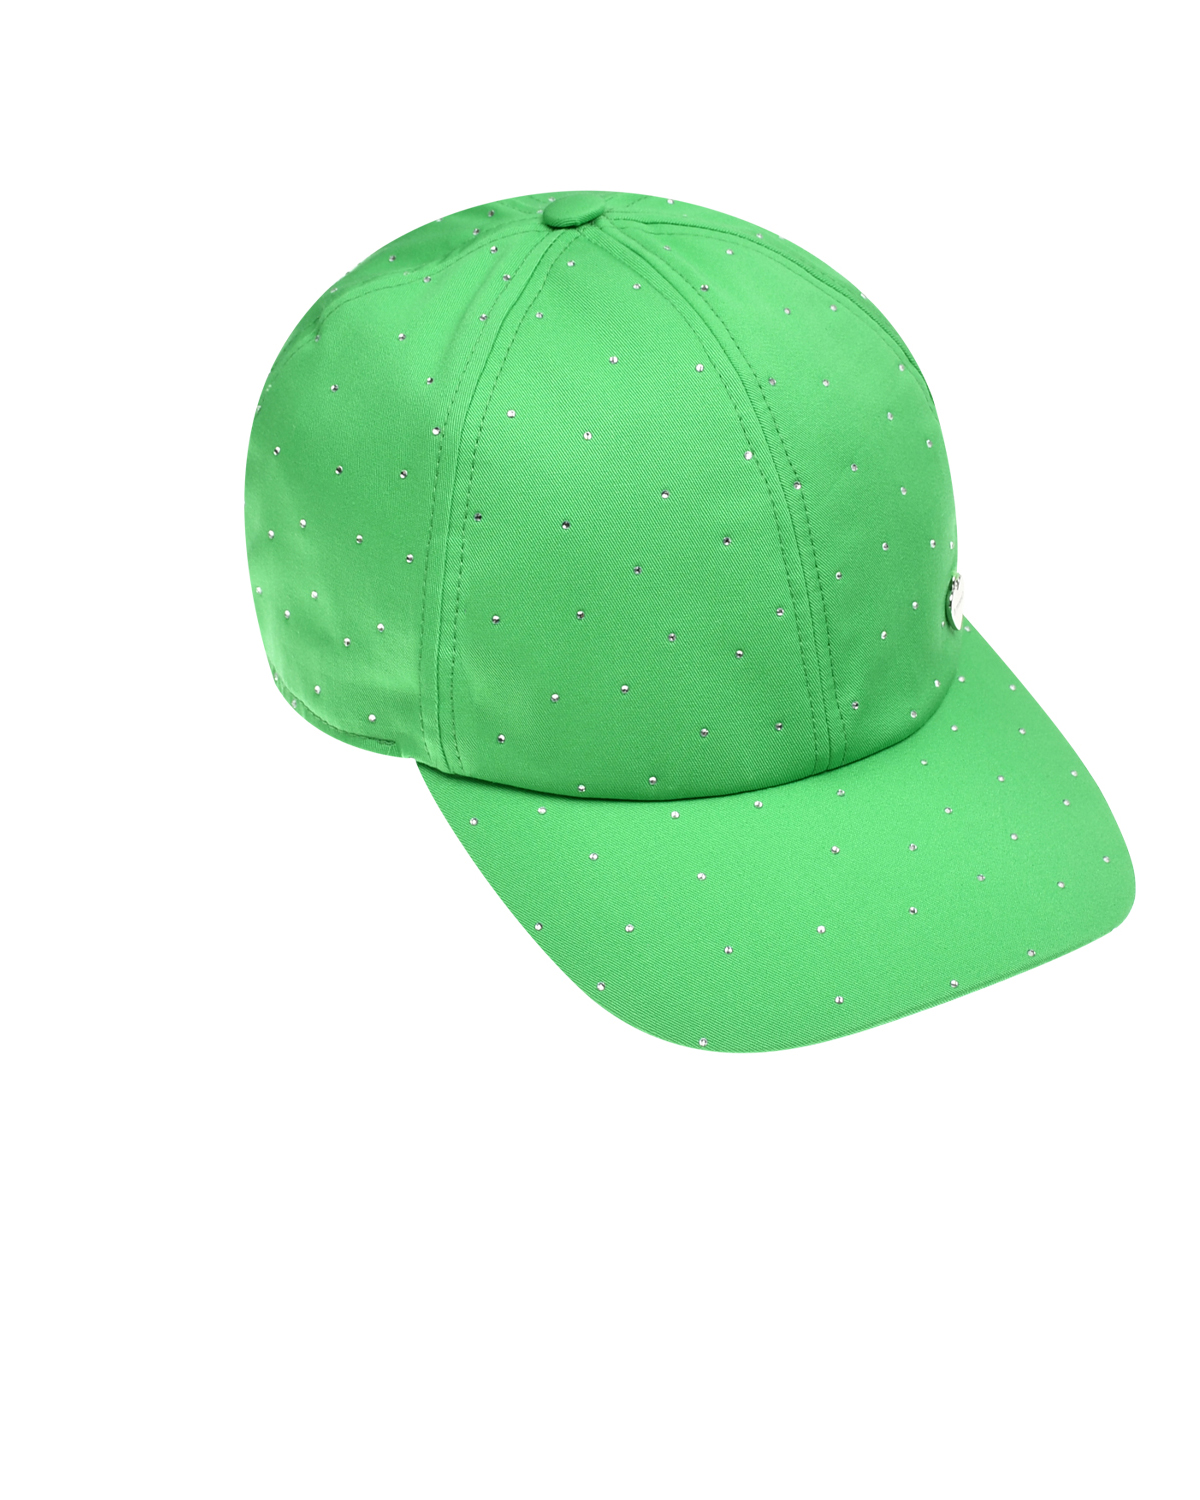 Кепка со стразами, зеленая Il Trenino, размер 56, цвет зеленый